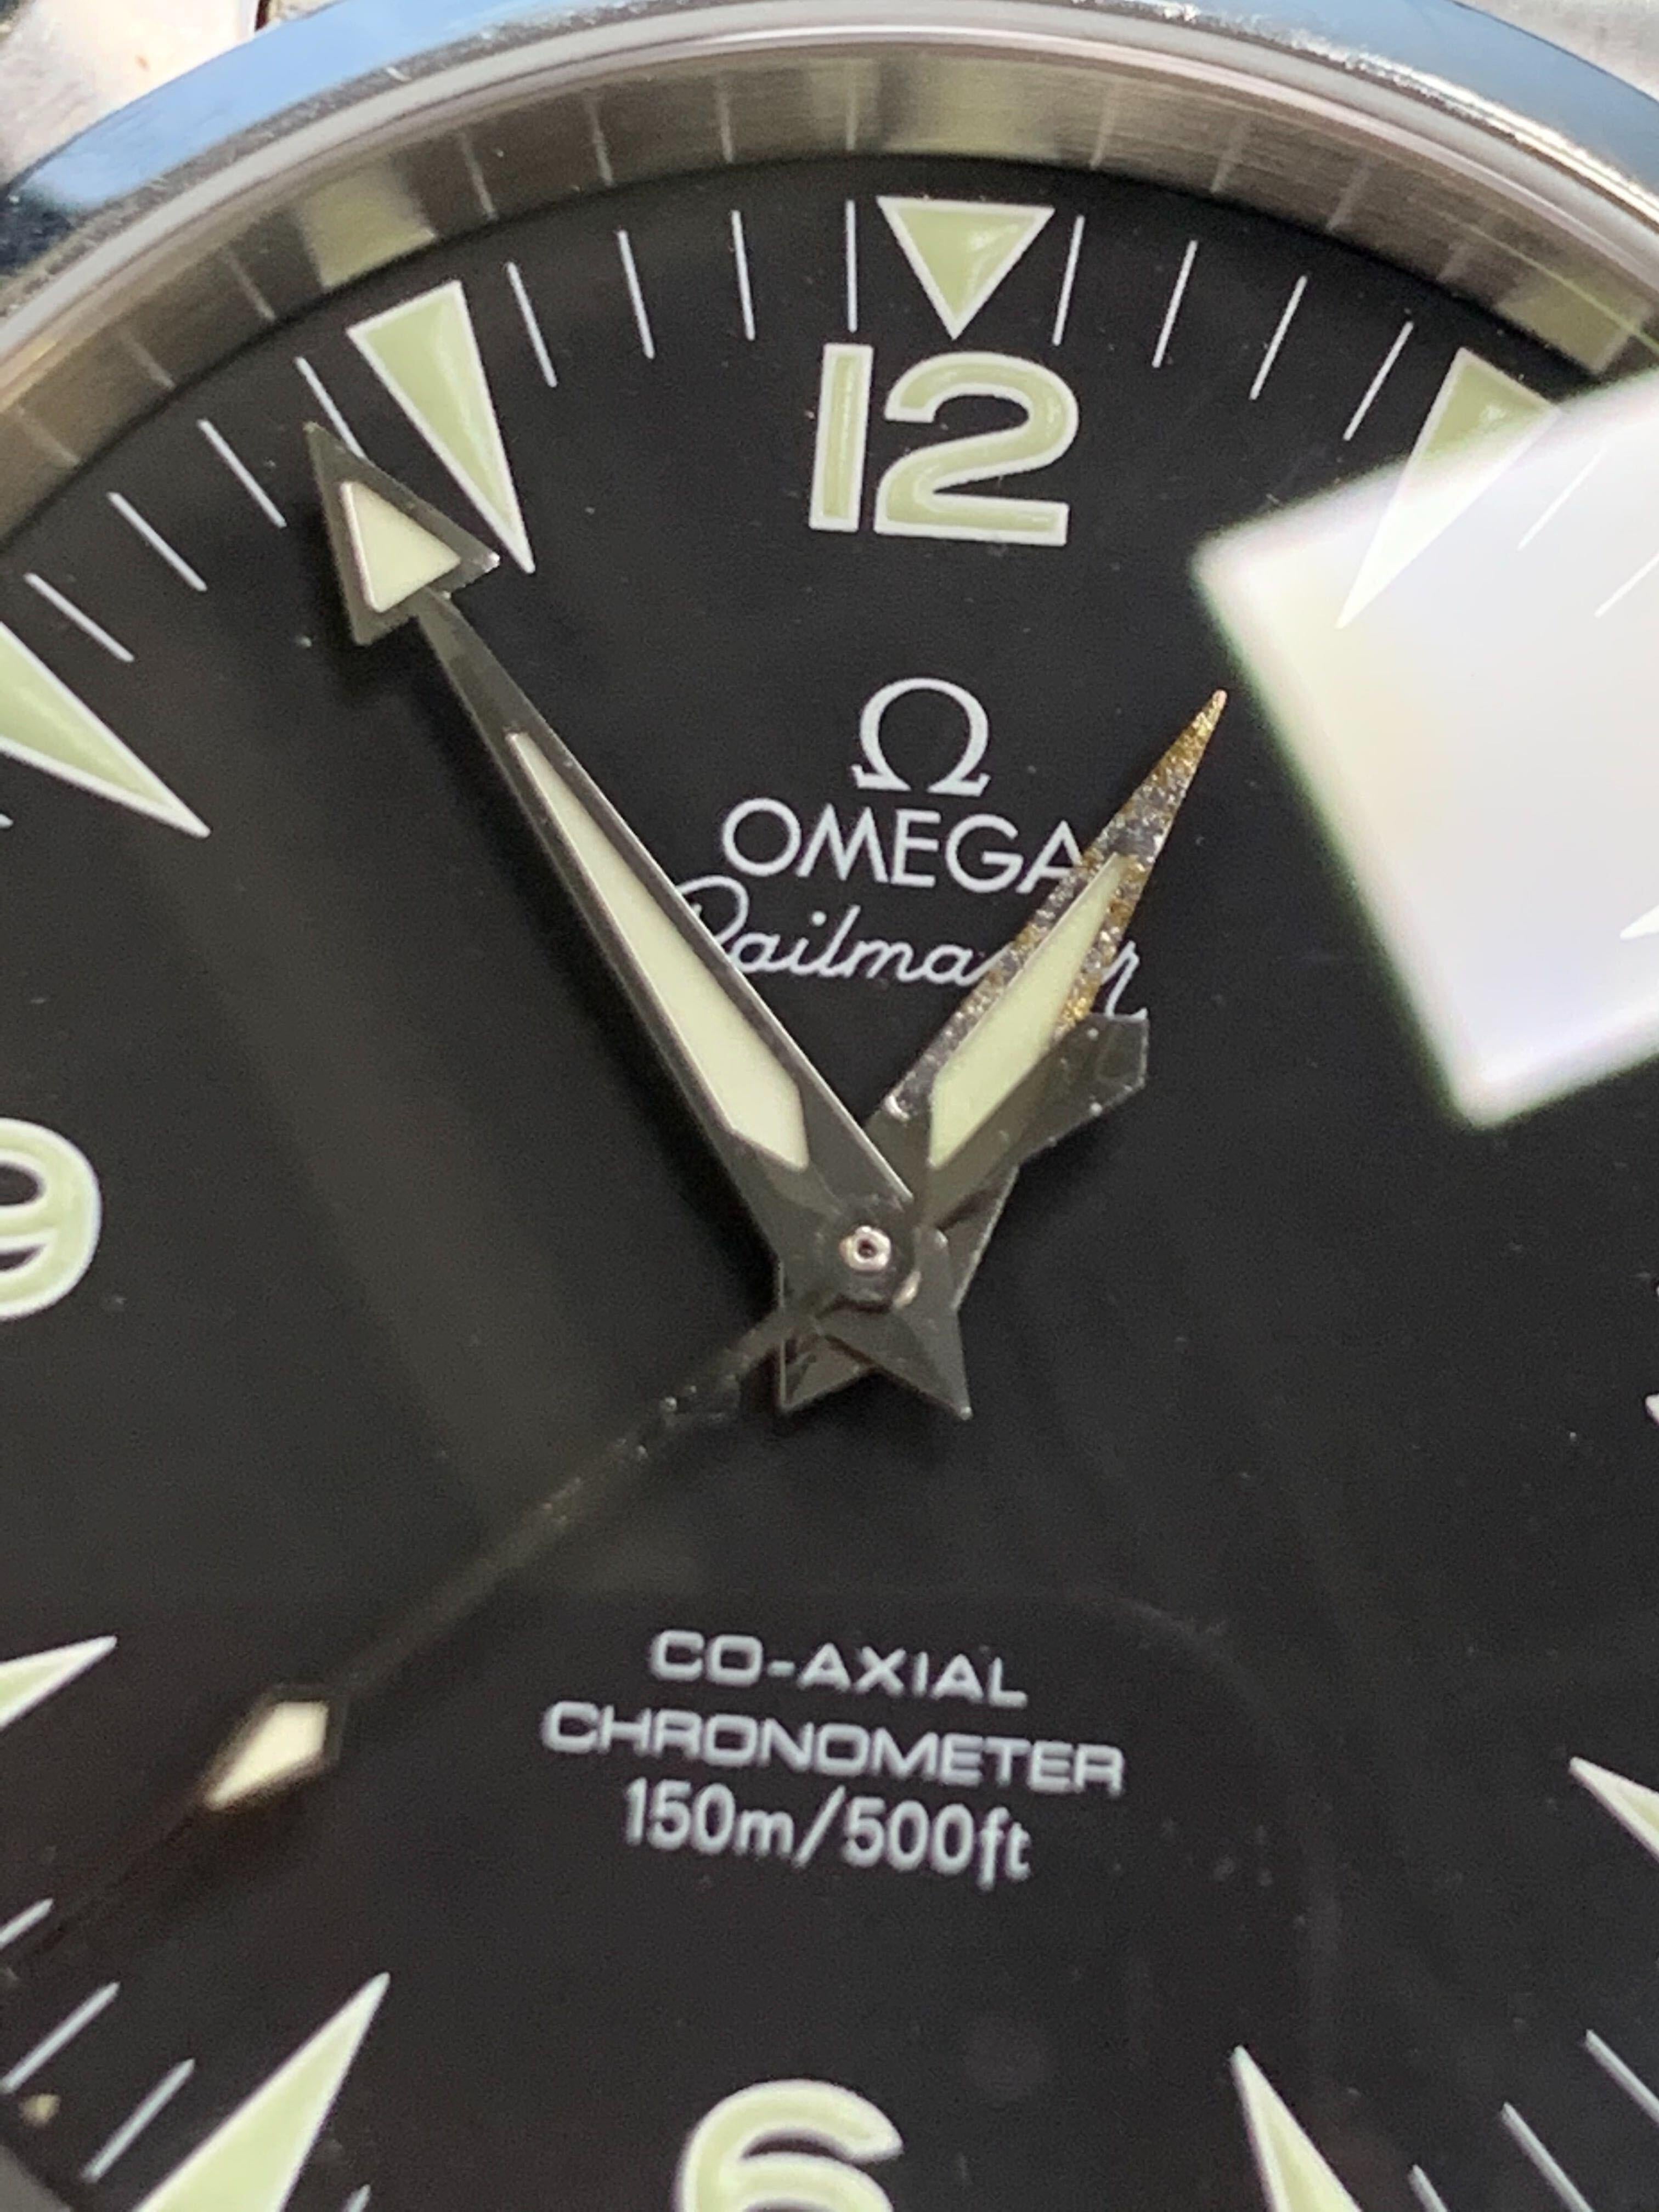 Omega Seamaster Aqua Terra Railmaster Steel Black Dial Men's Watch 2503.52.00 2